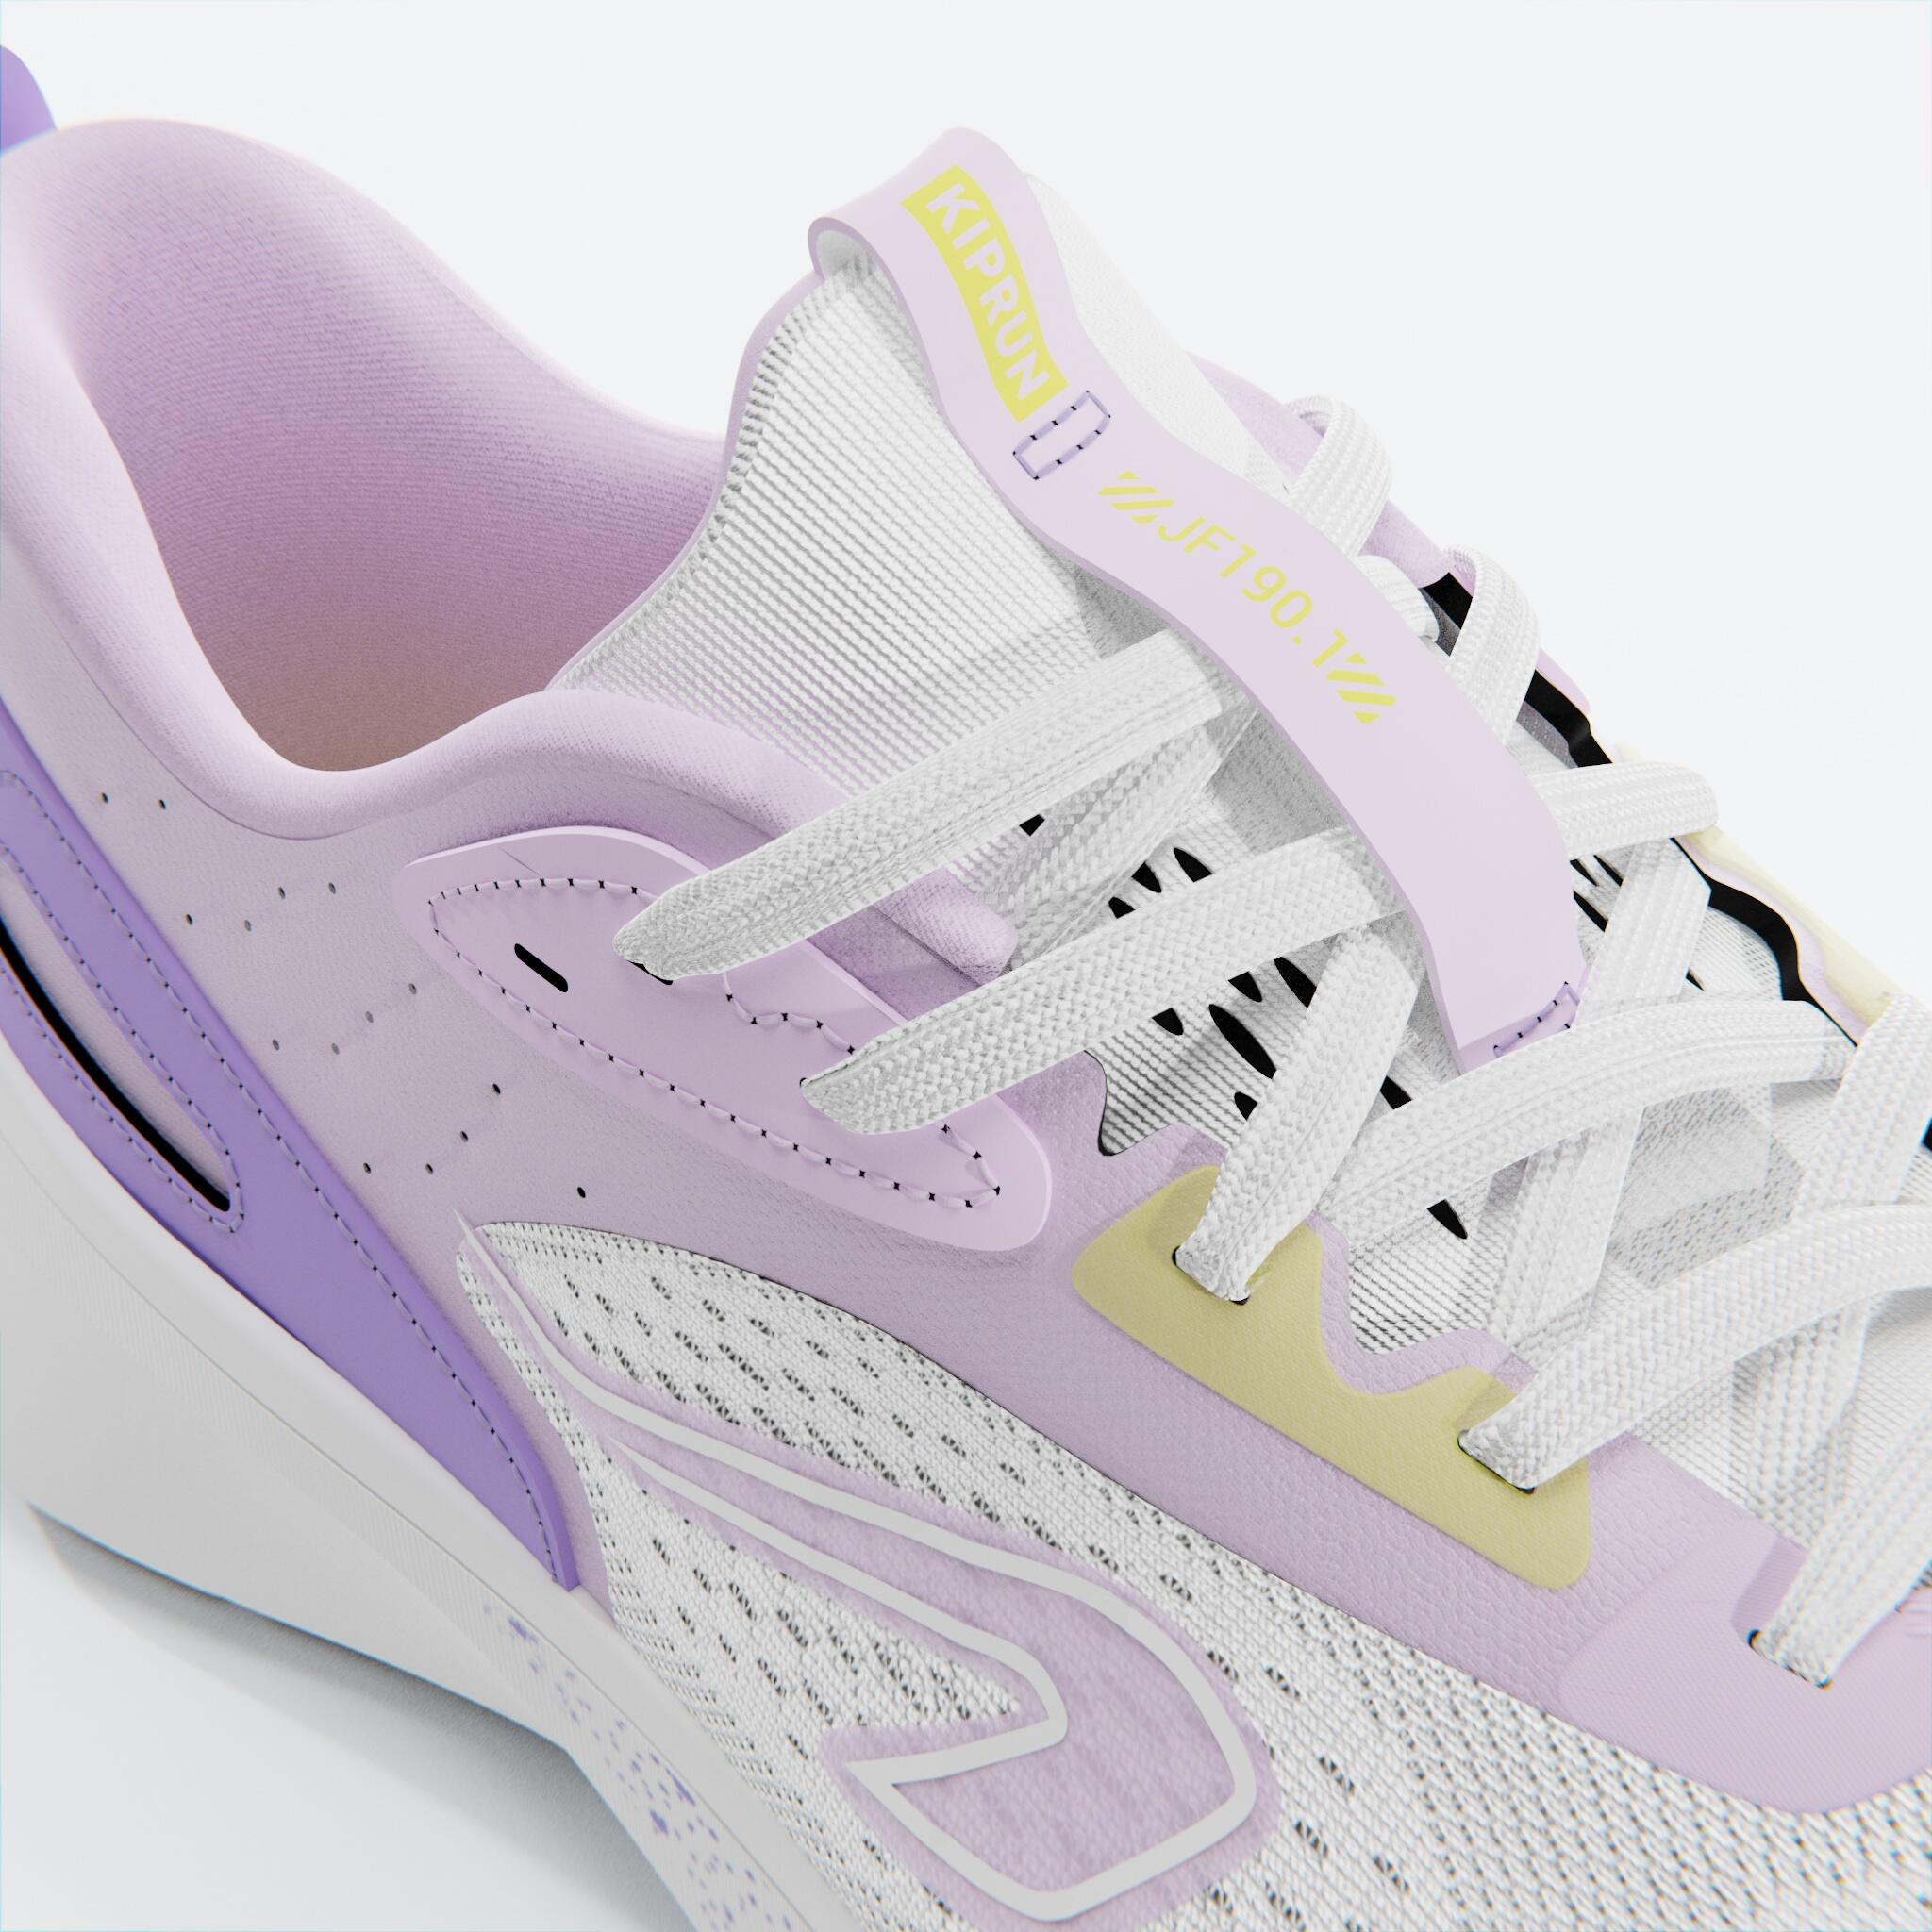 JOGFLOW 190.1 Women's Running Shoes - White/Purple 5/7